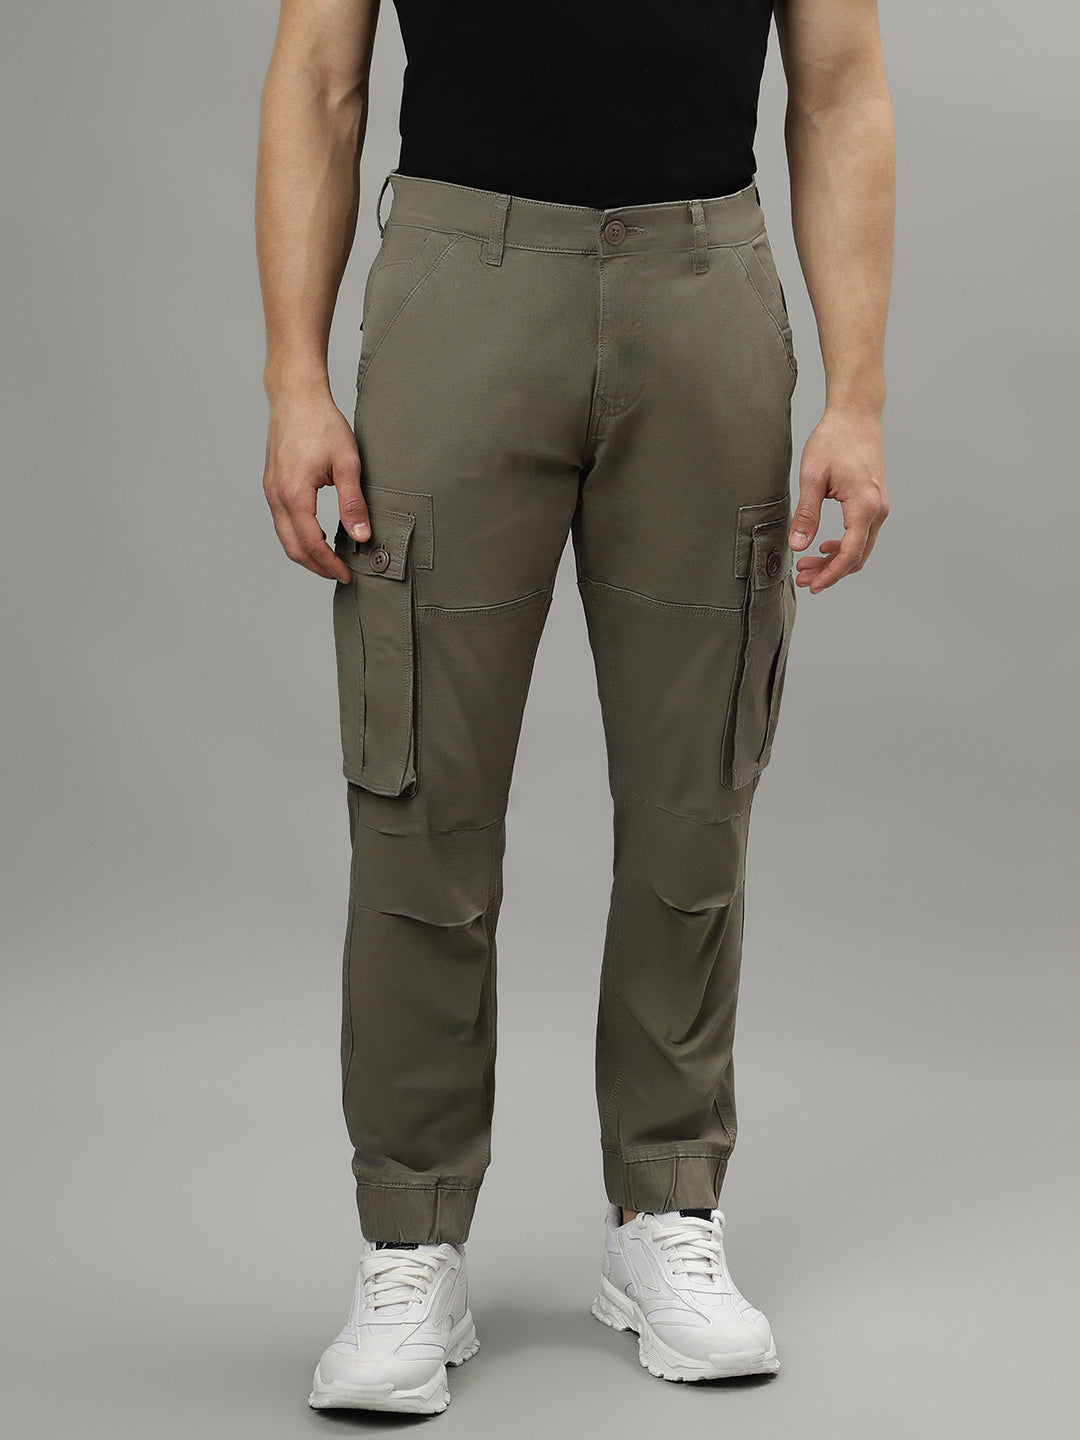 Cargo Joggers Techwear Army Green Men's Cargo Trousers Loose Cargo Pants -  Etsy